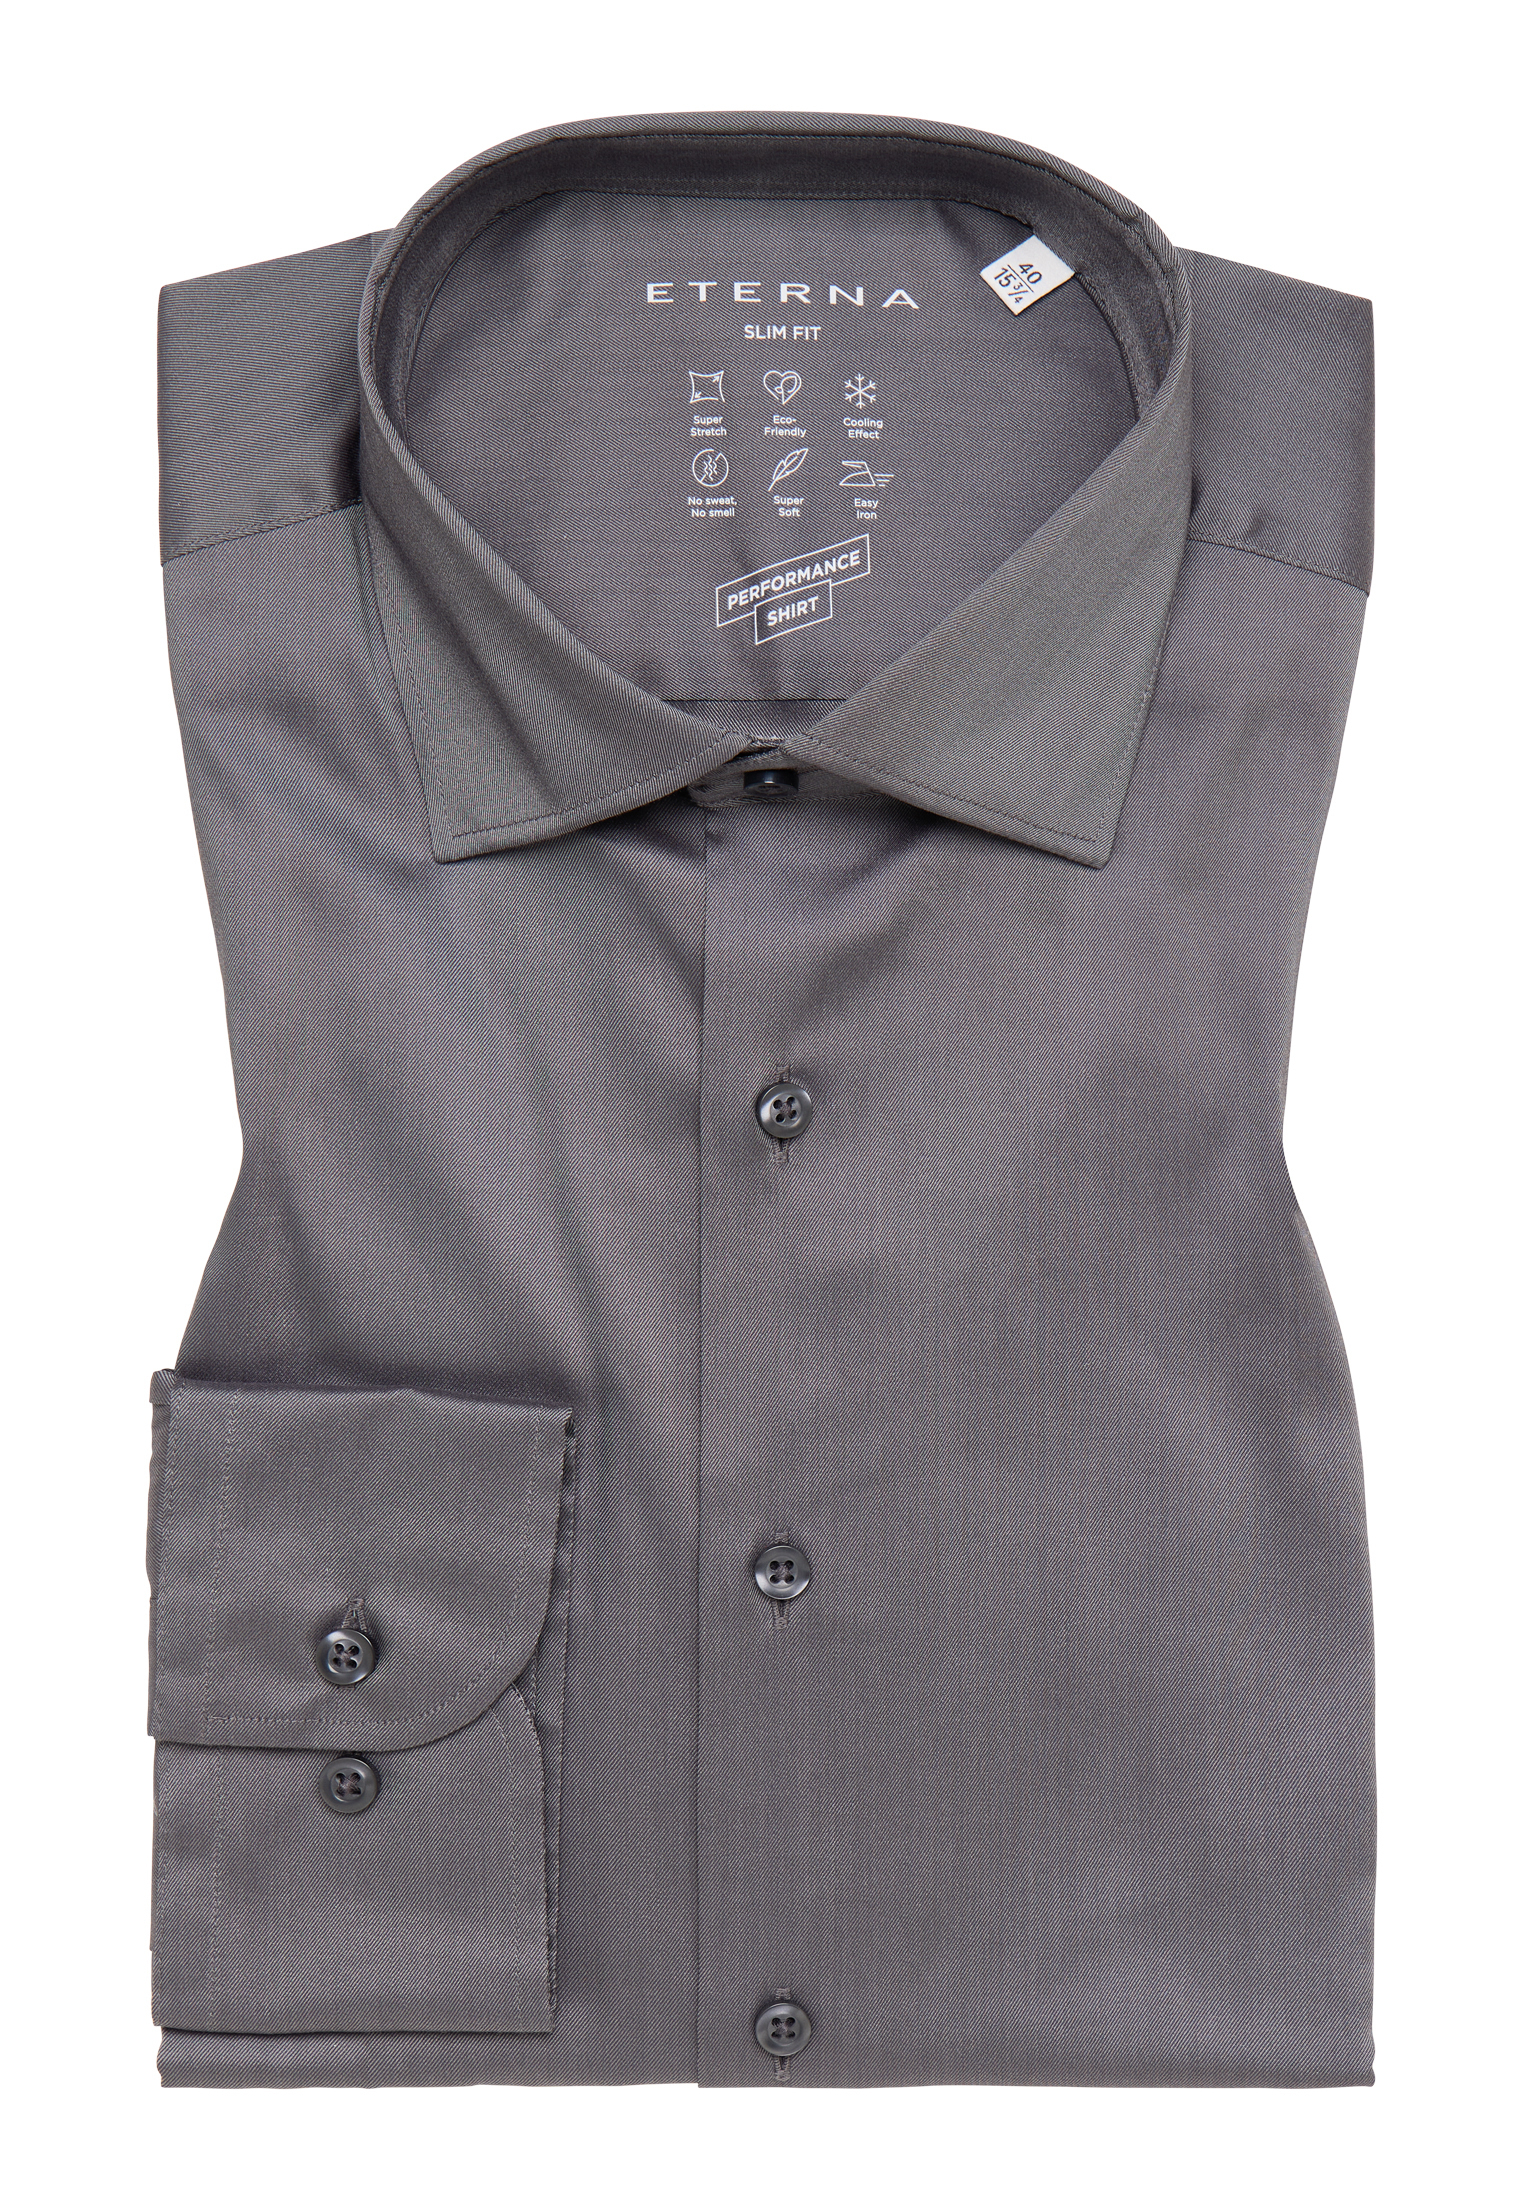 SLIM FIT Performance Shirt unifarben grau | | | super 43 1SH02217-03-01-43-72 langer Arm (72 | grau cm) in